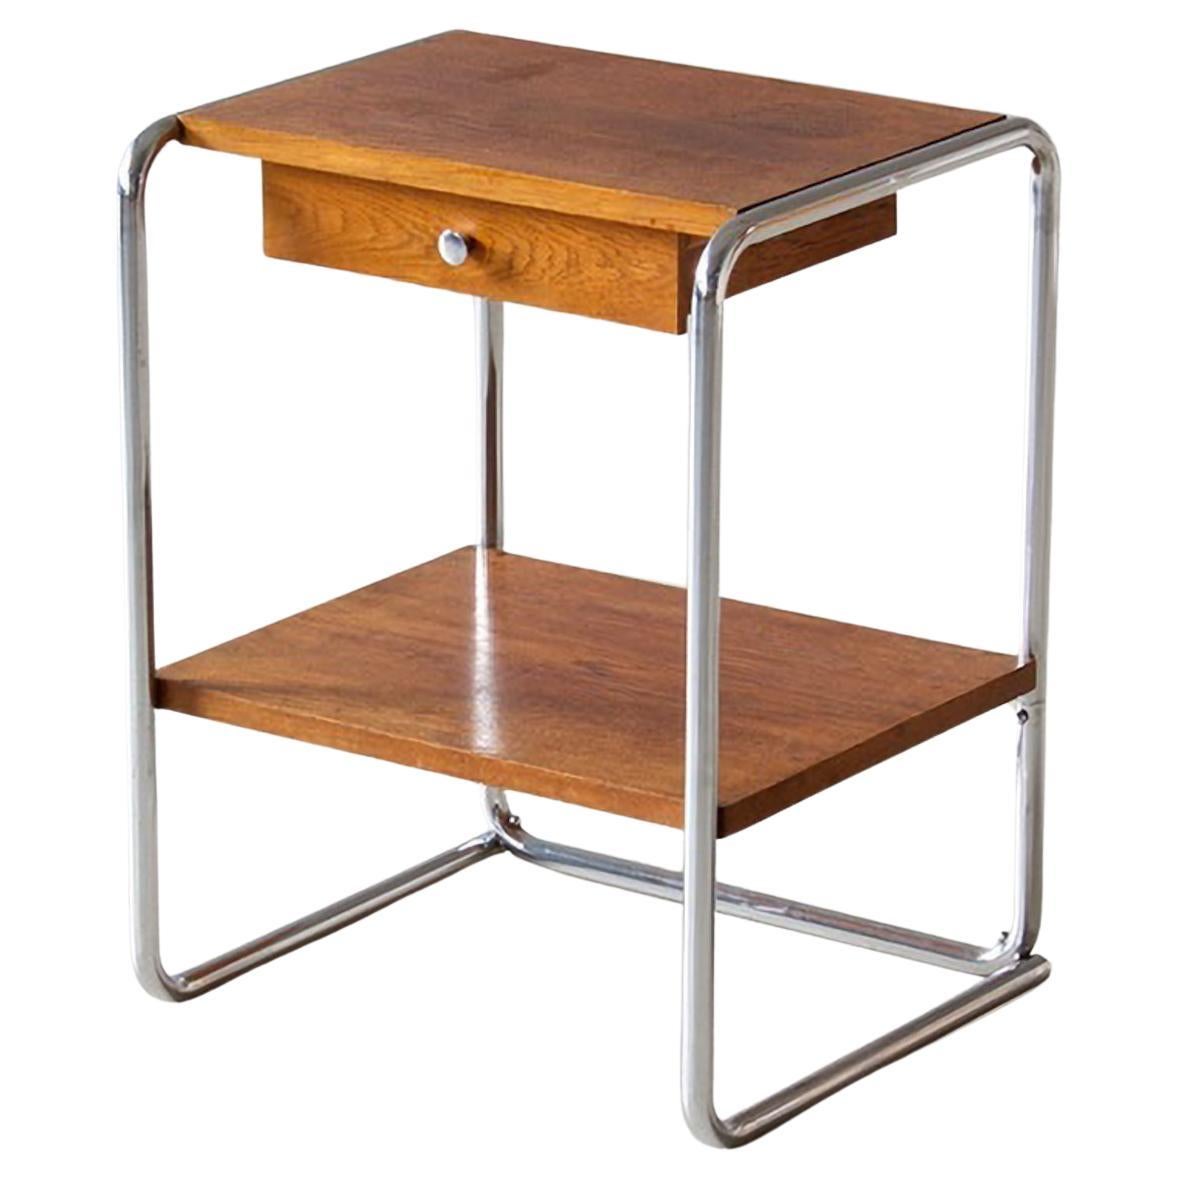 Bauhaus Tubular Steel End Table With Drawer, Chromed Metal, Veneered Wood, 1930 For Sale